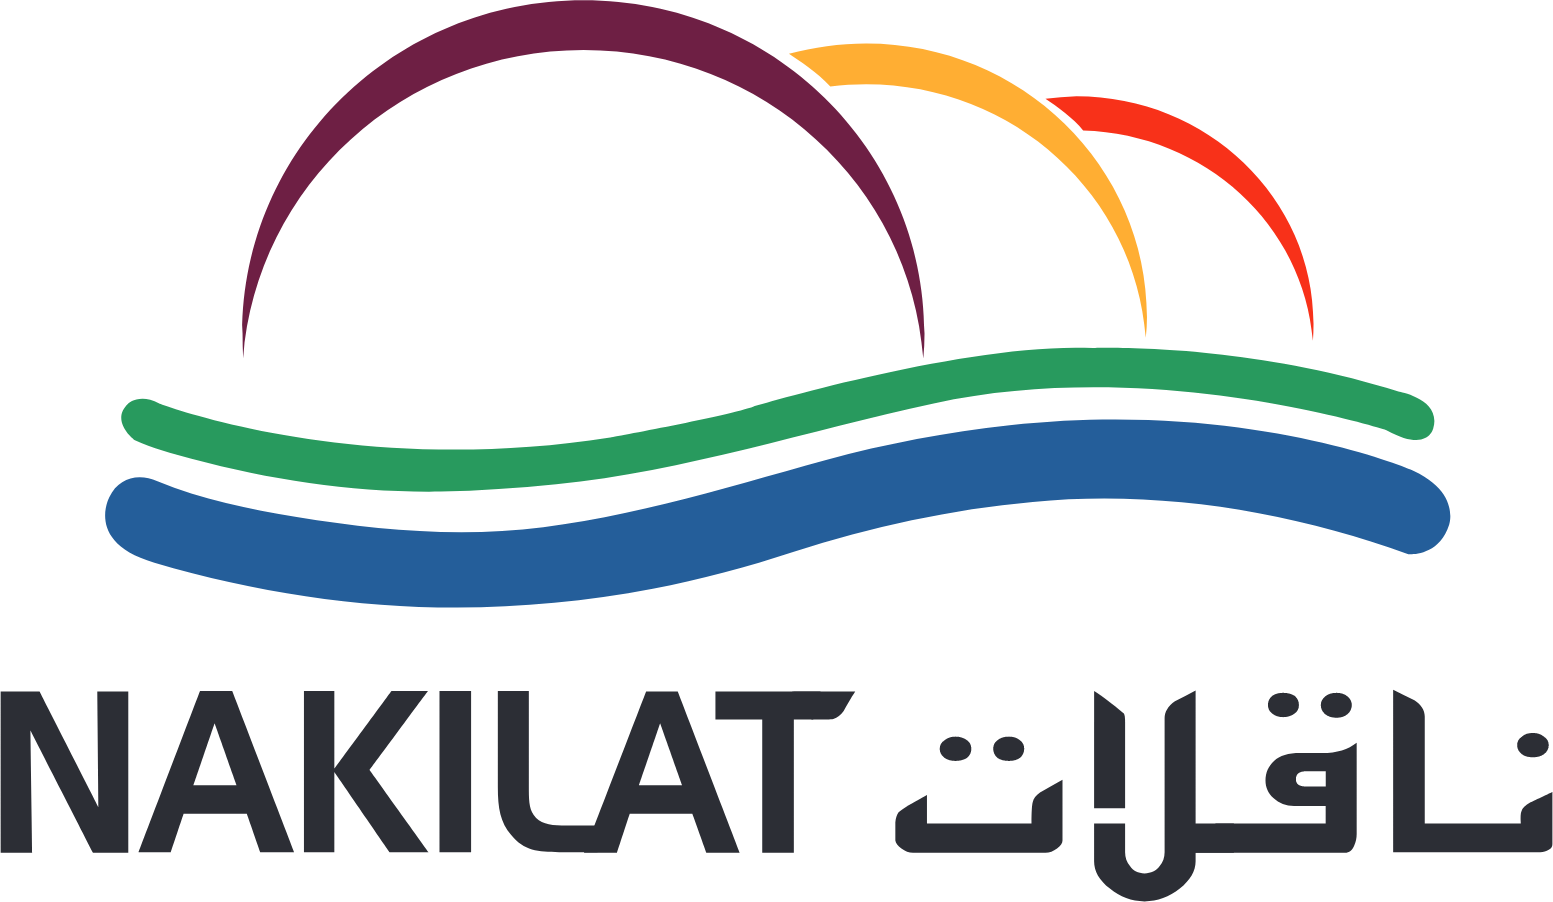 Qatar Gas Transport Company logo large (transparent PNG)